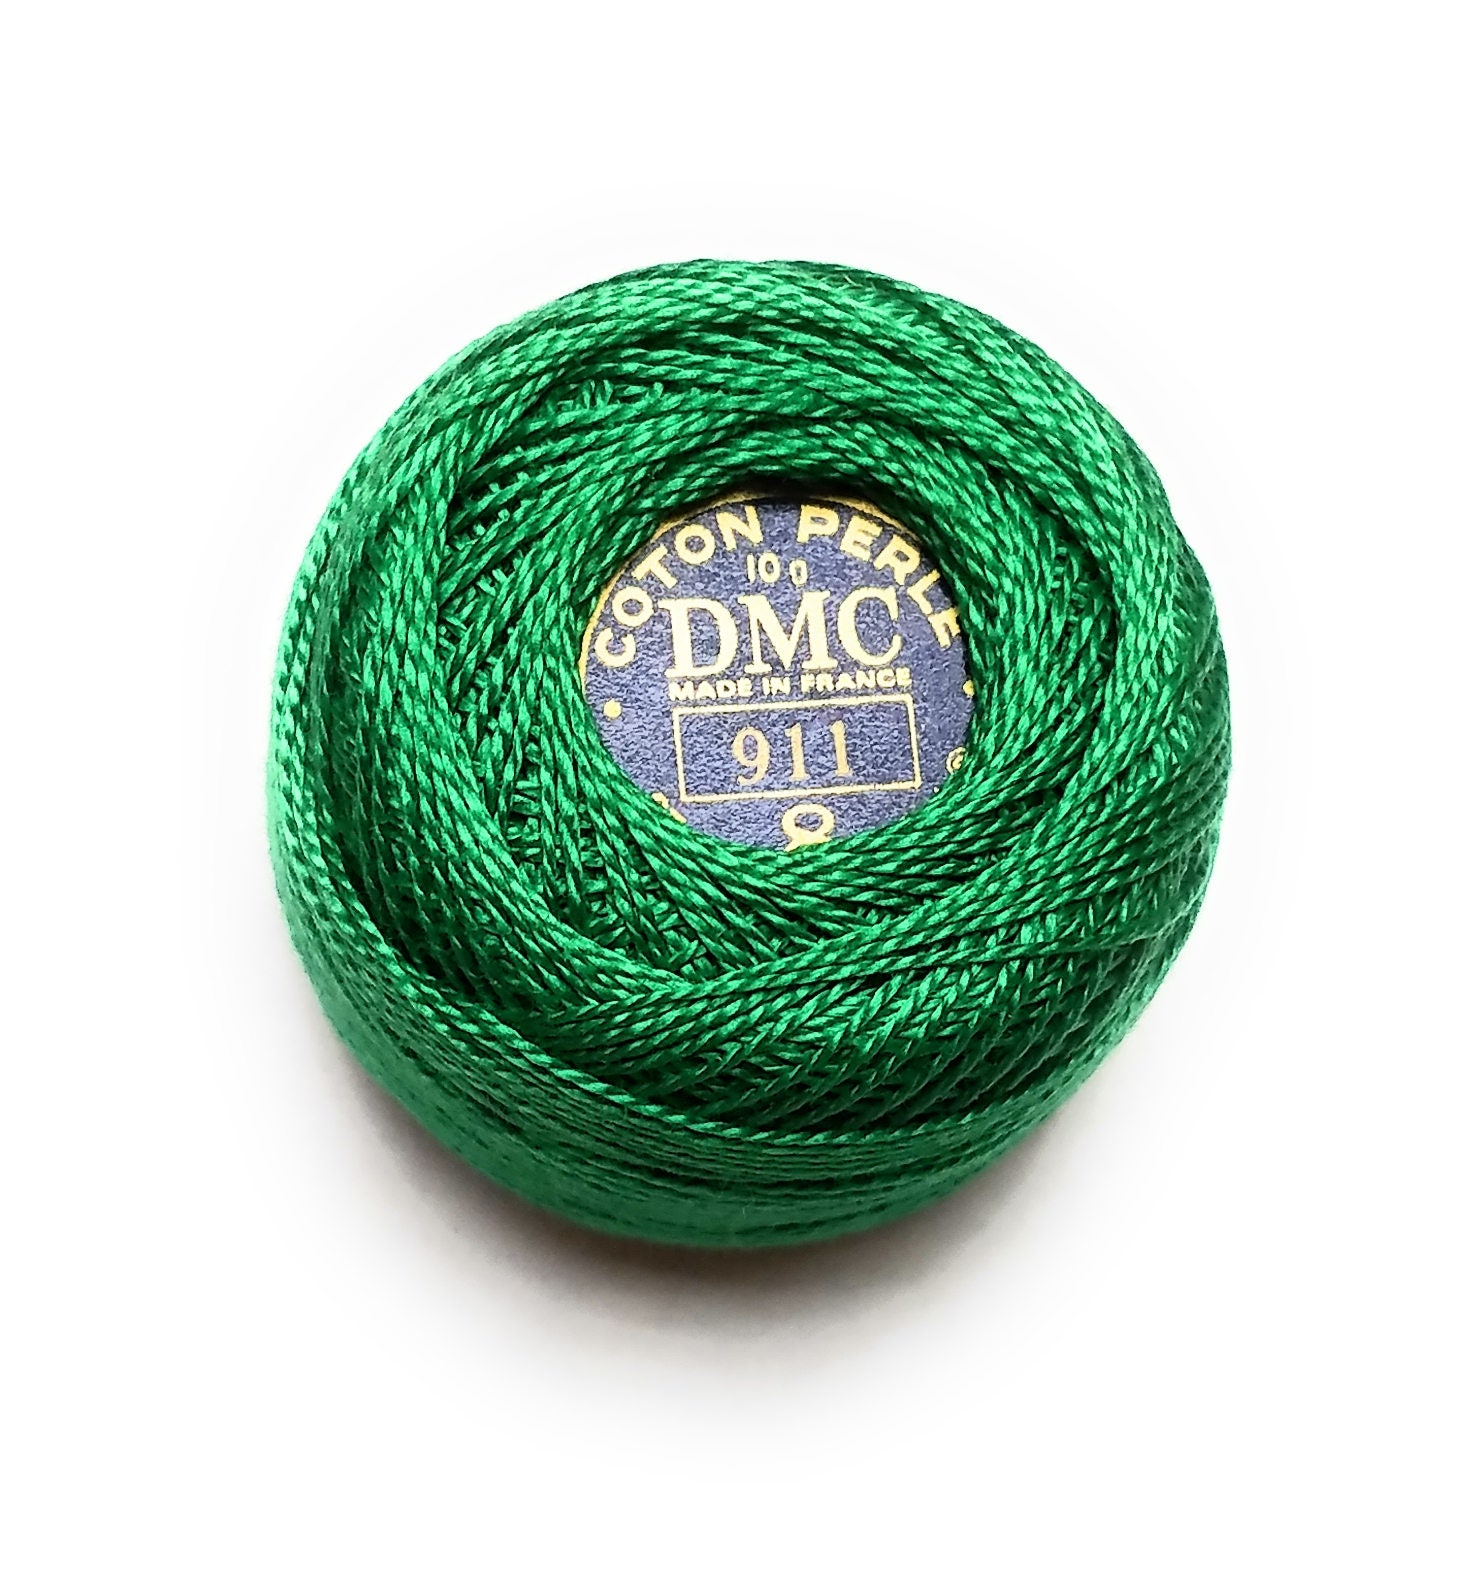 Size 8 Pearl Cotton Ball in Color 911 ~ Medium Emerald Green